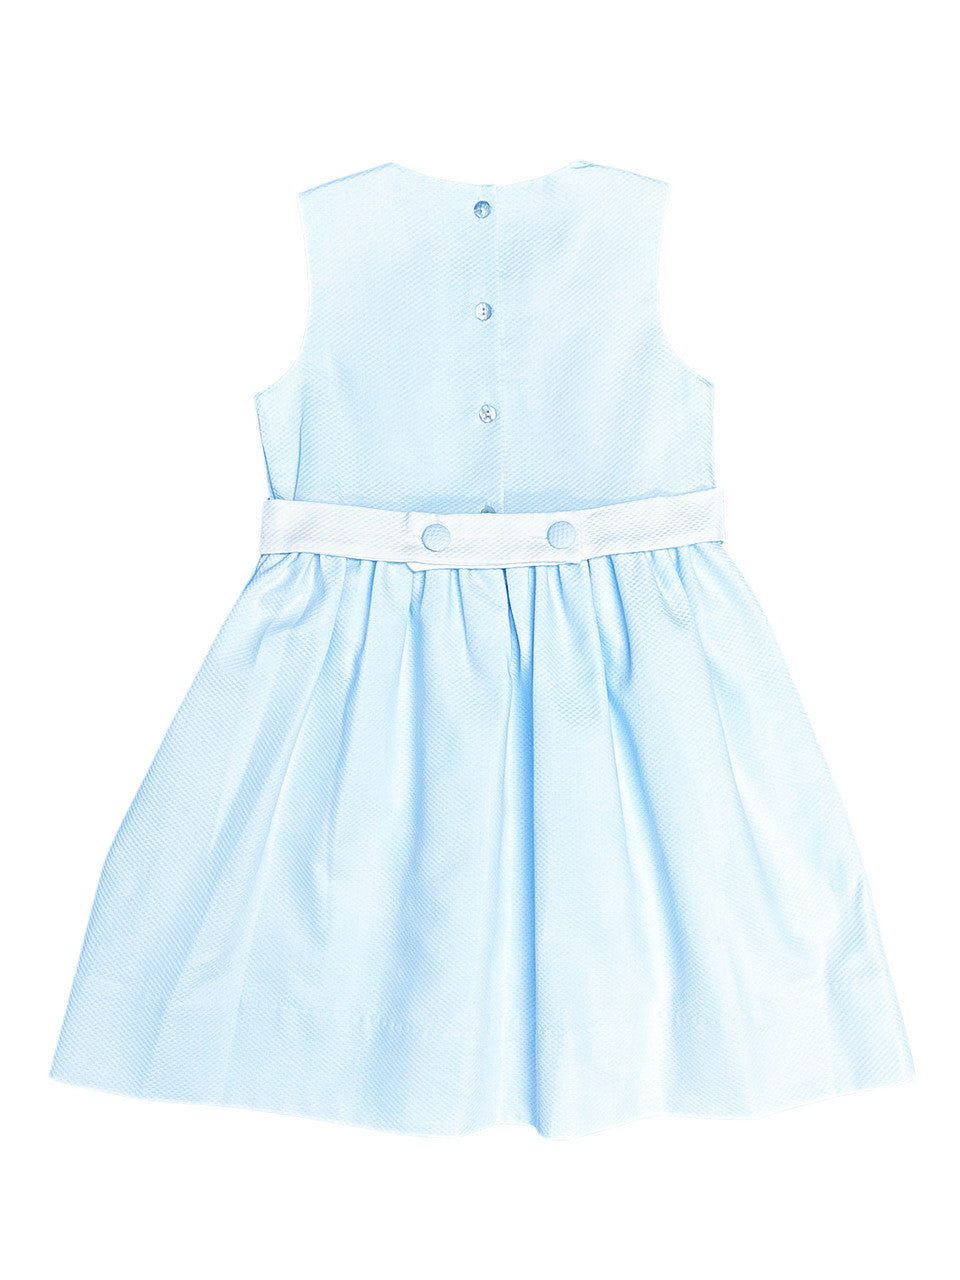 Blue and White Pique Dress